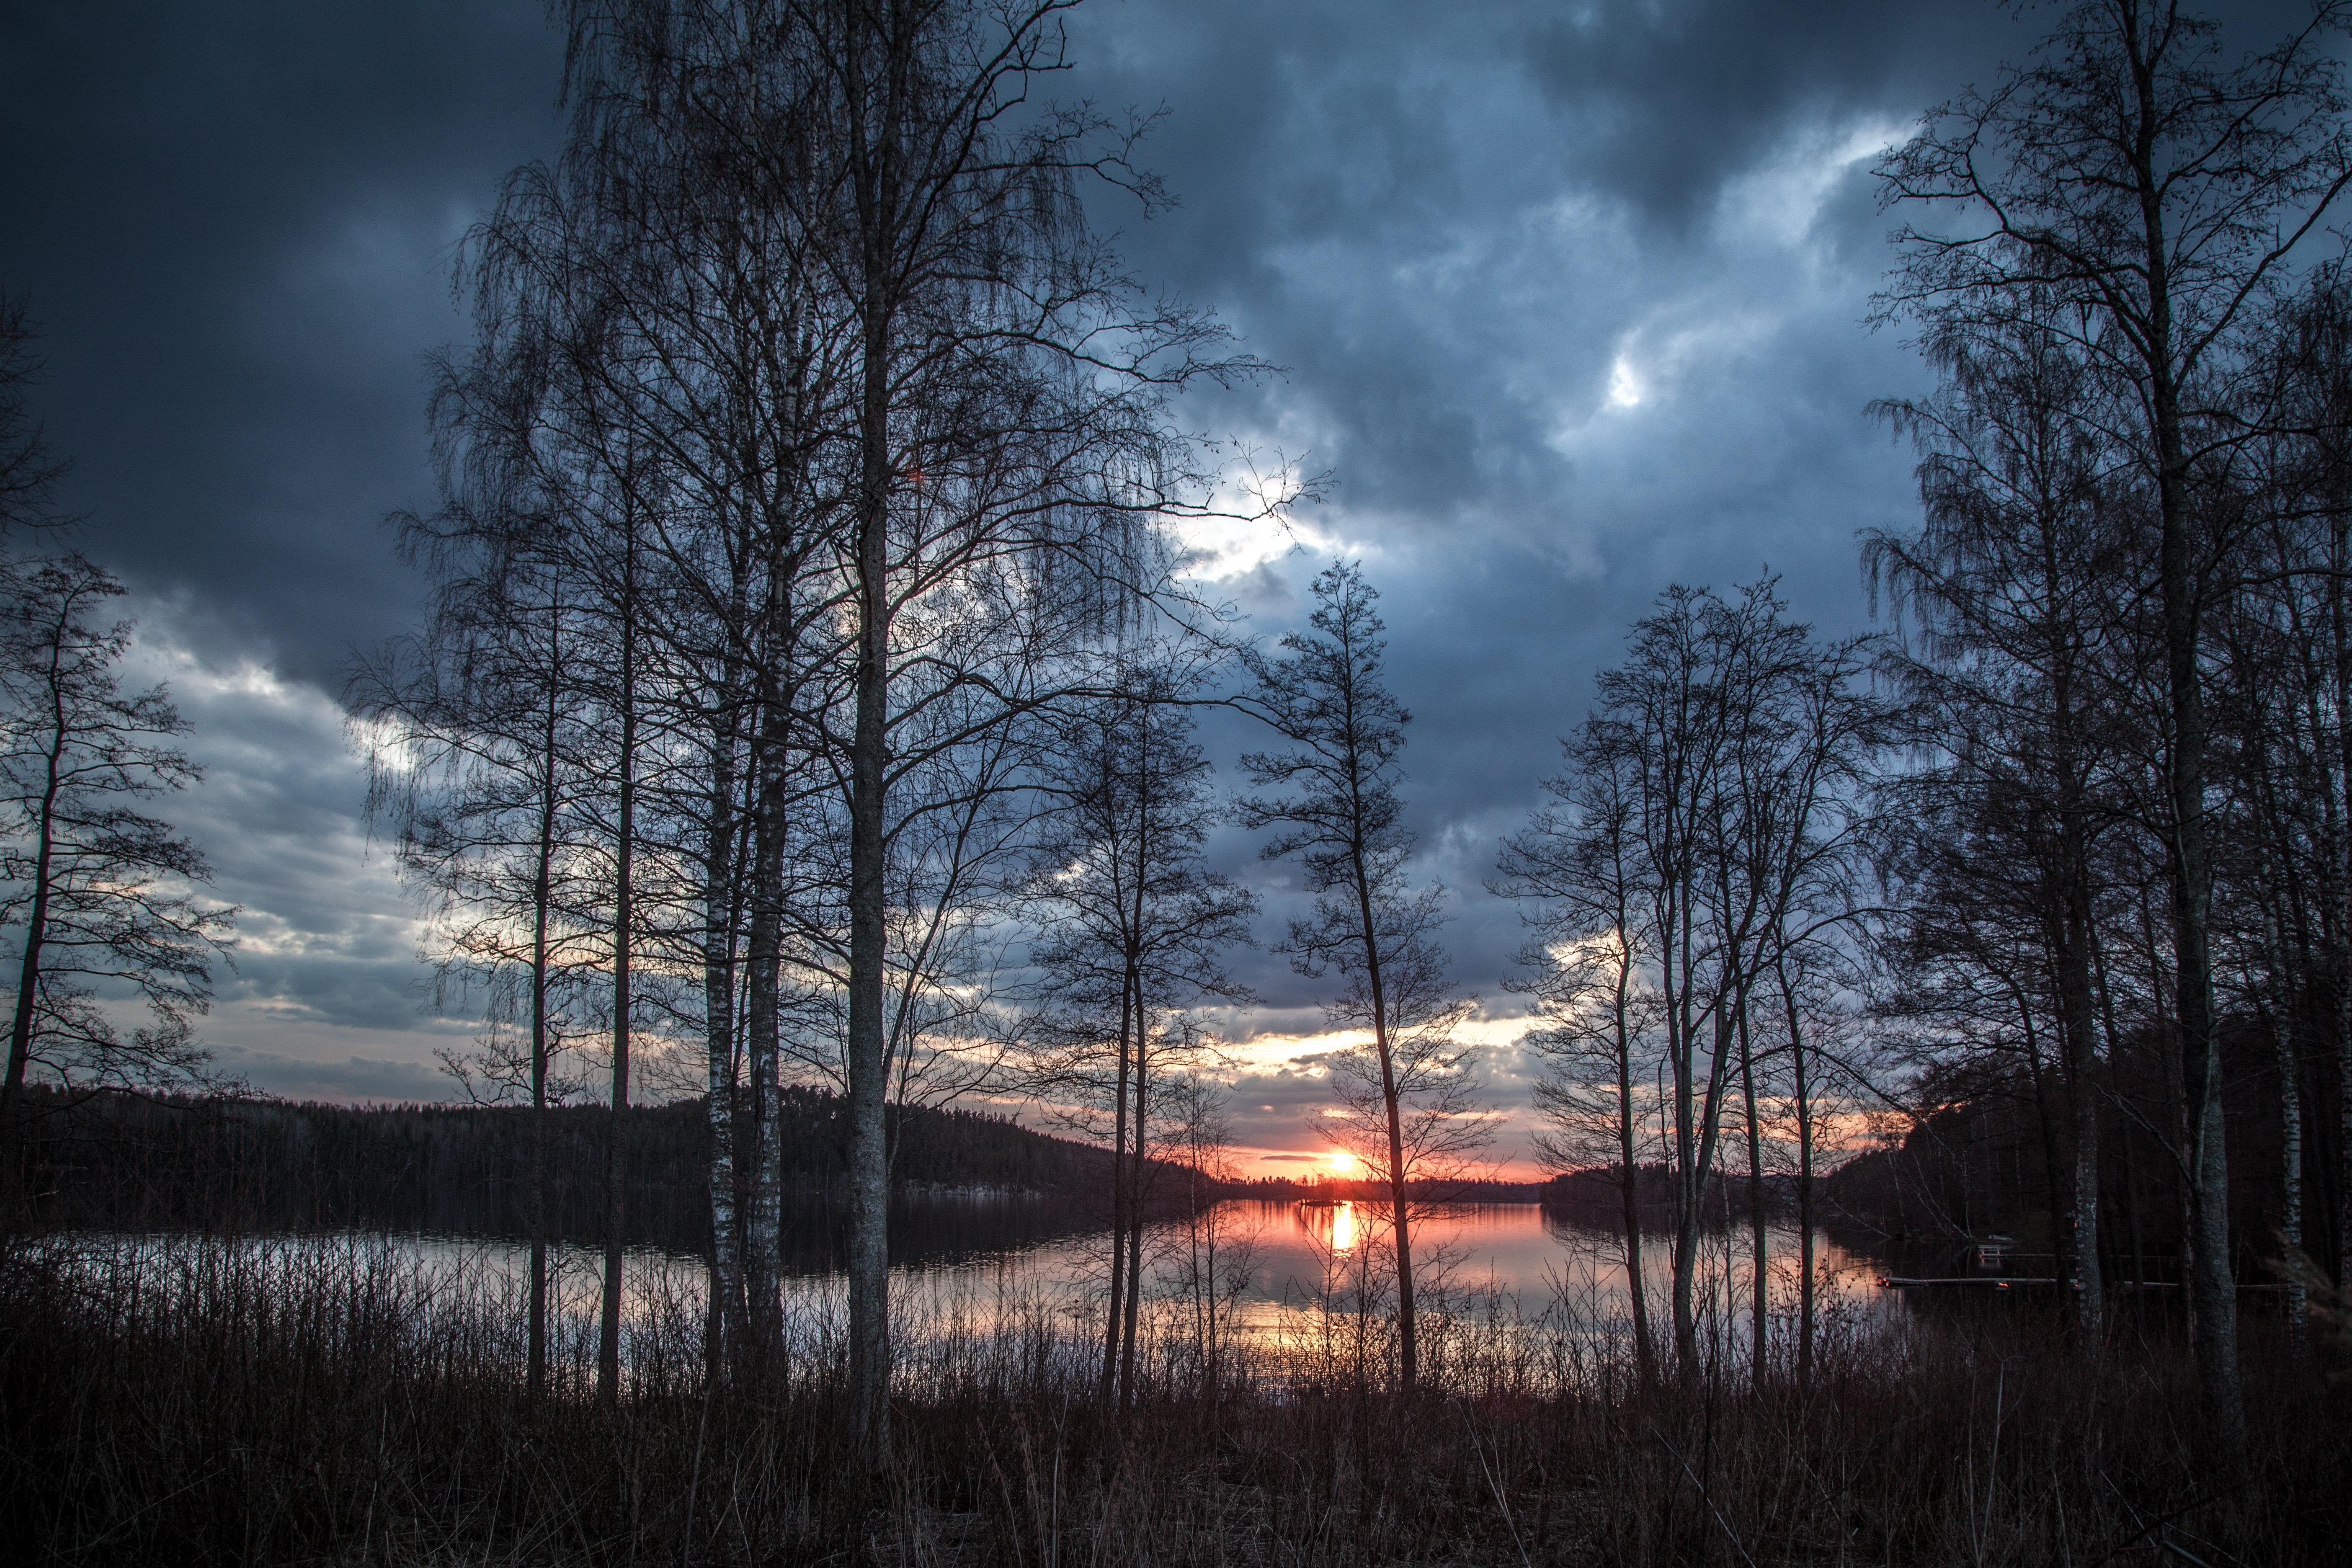 Весенняя ночь. Озеро Паасселка, Финляндия. Финляндия, огни озера Паасселка. Природа. Весенний вечер в лесу.